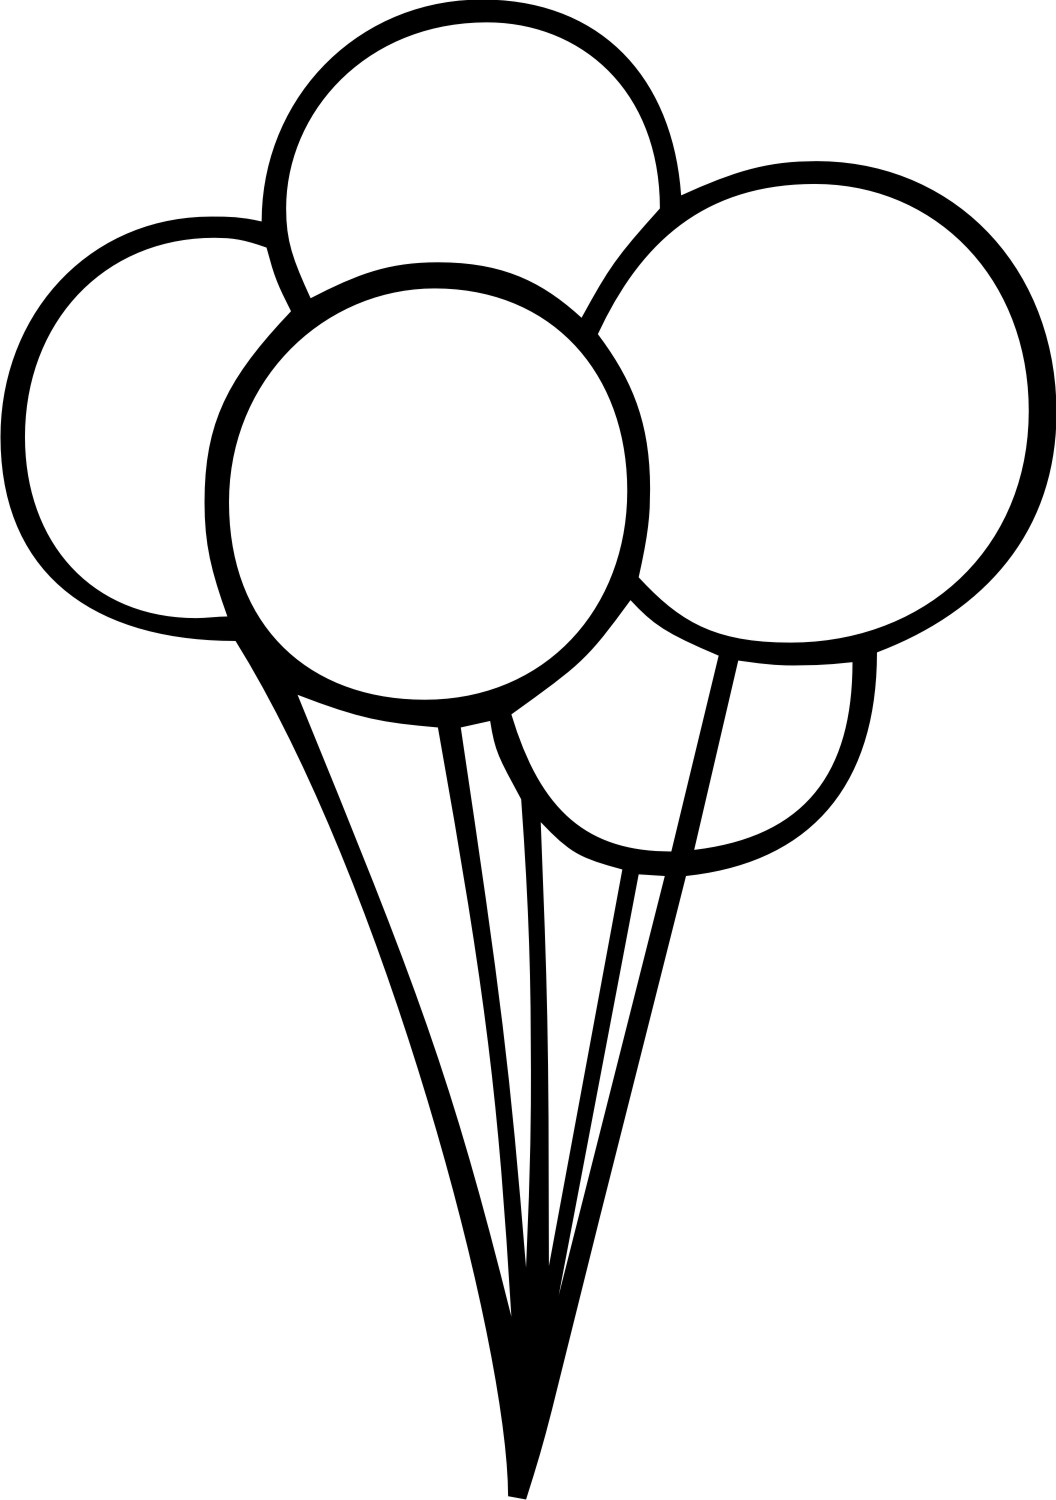 Balloon designs pictures balloon clipart